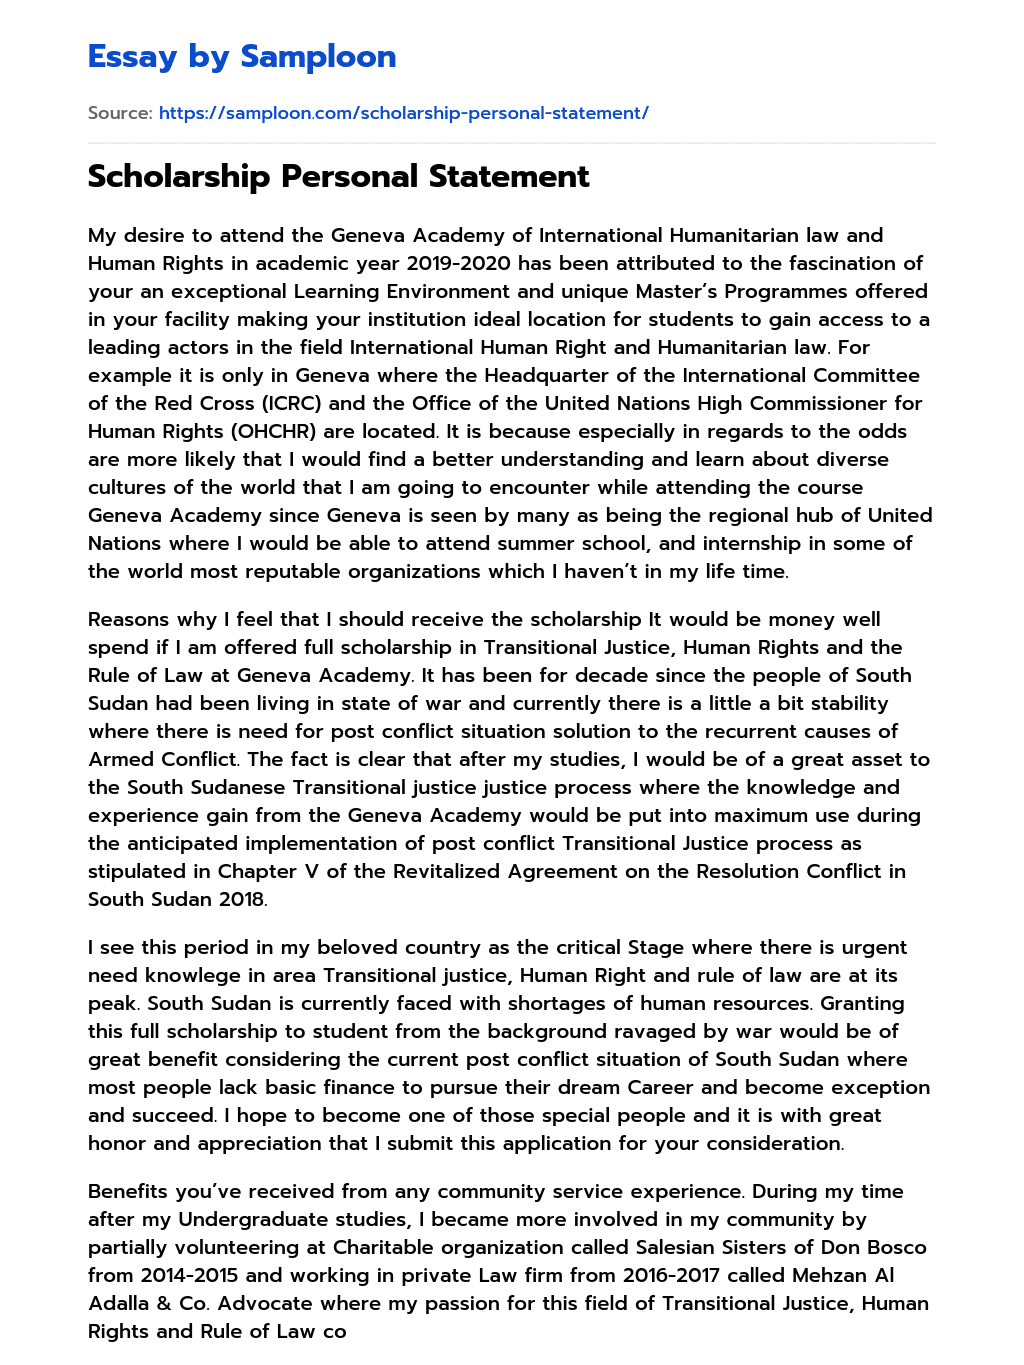 Scholarship Personal Statement essay